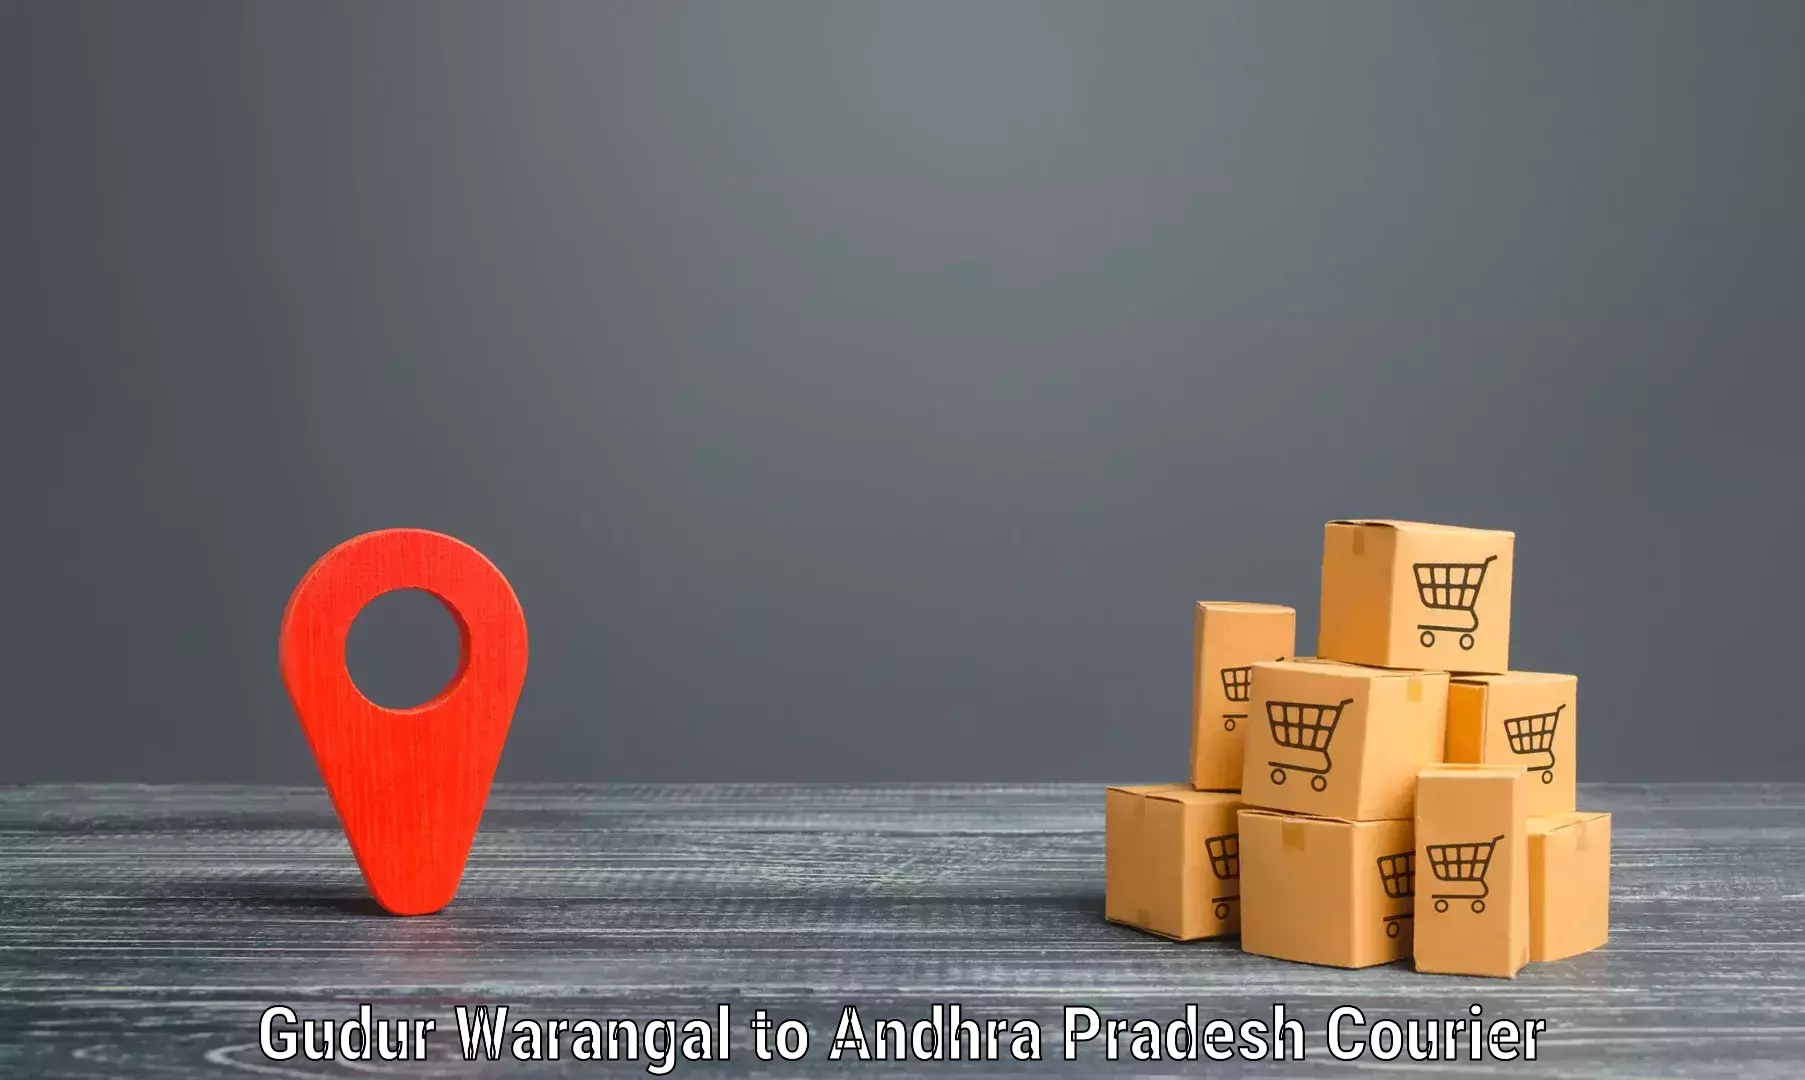 Express mail service Gudur Warangal to Chandragiri